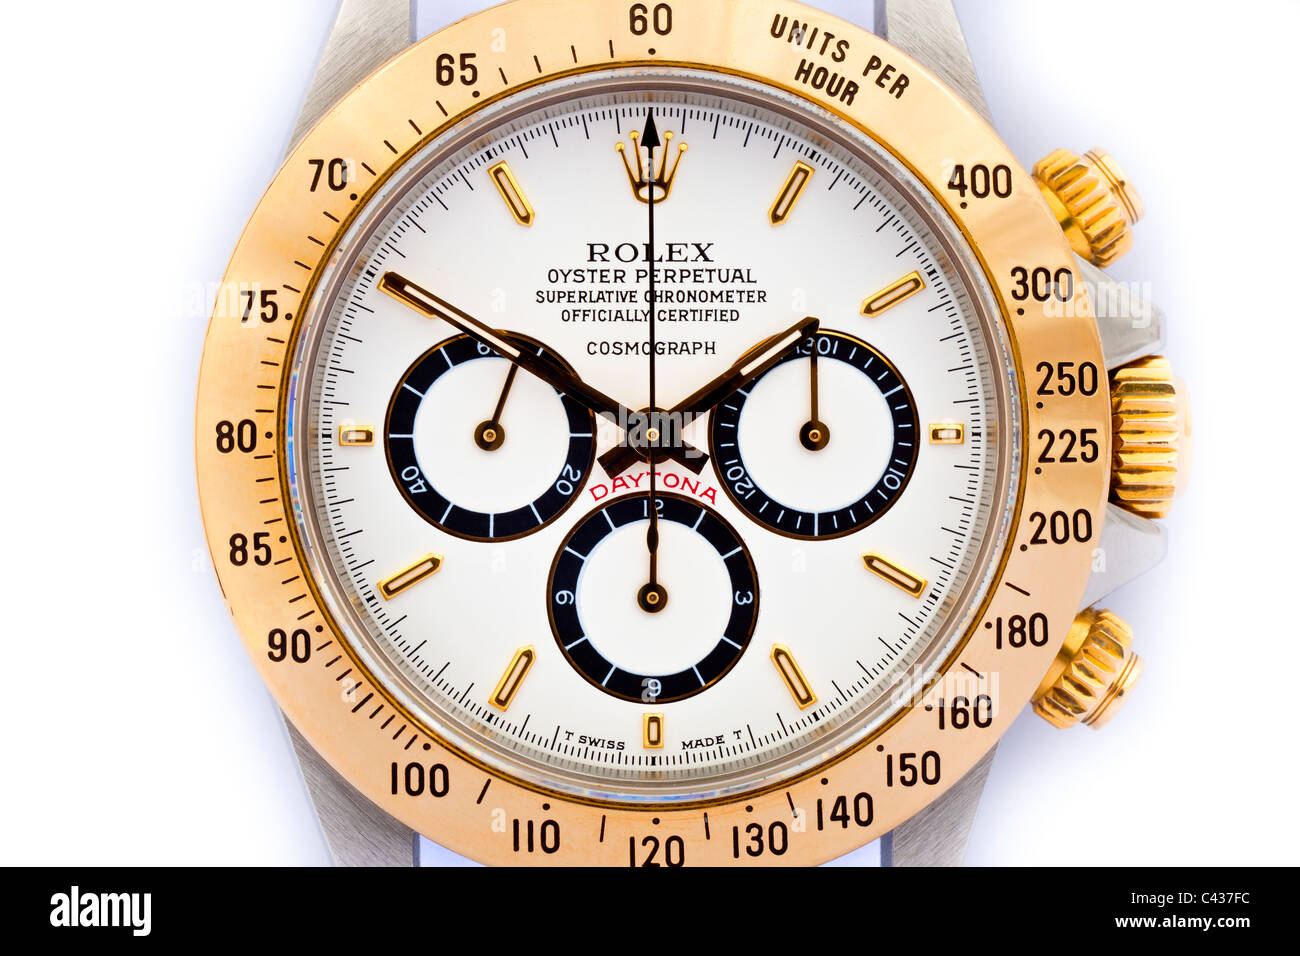 Rolex Daytona Cosmograph Oyster Perpetual Chronometer 18k Gold und Stahl Swiss Chronograph Armbanduhr mit weißem Zifferblatt JMH4898 Stockfoto